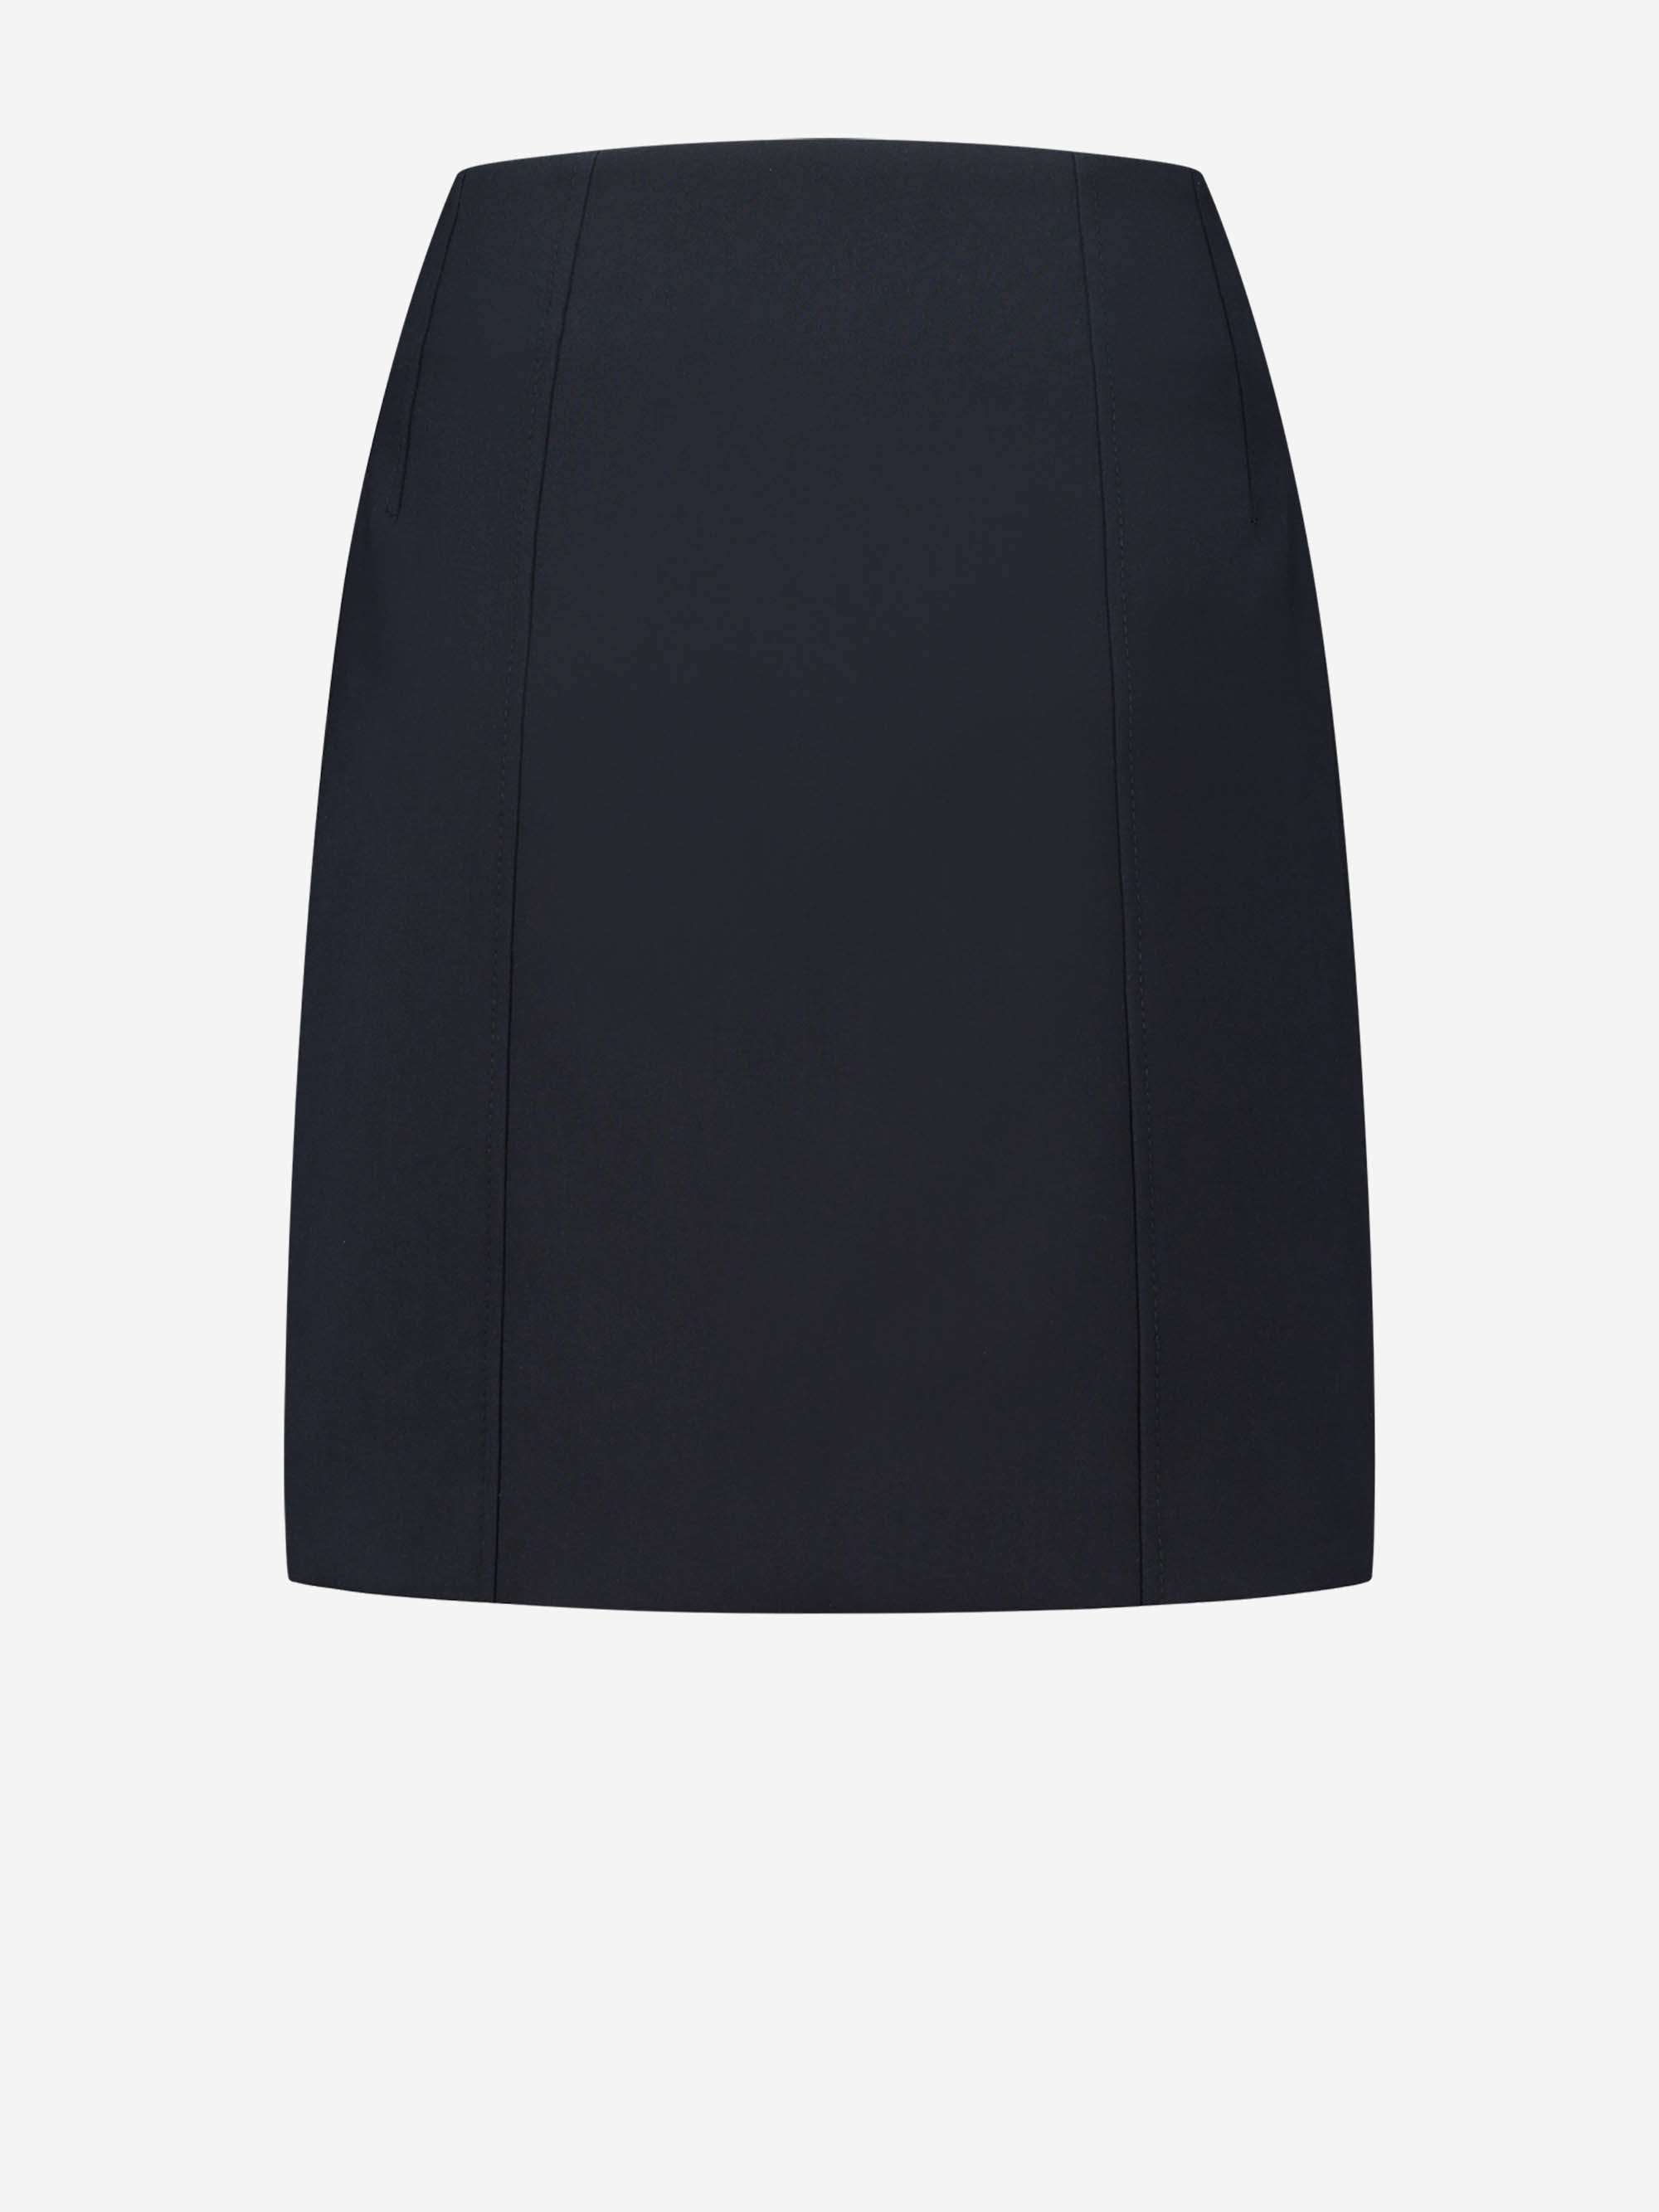 Asymmetric skirt with high rise 